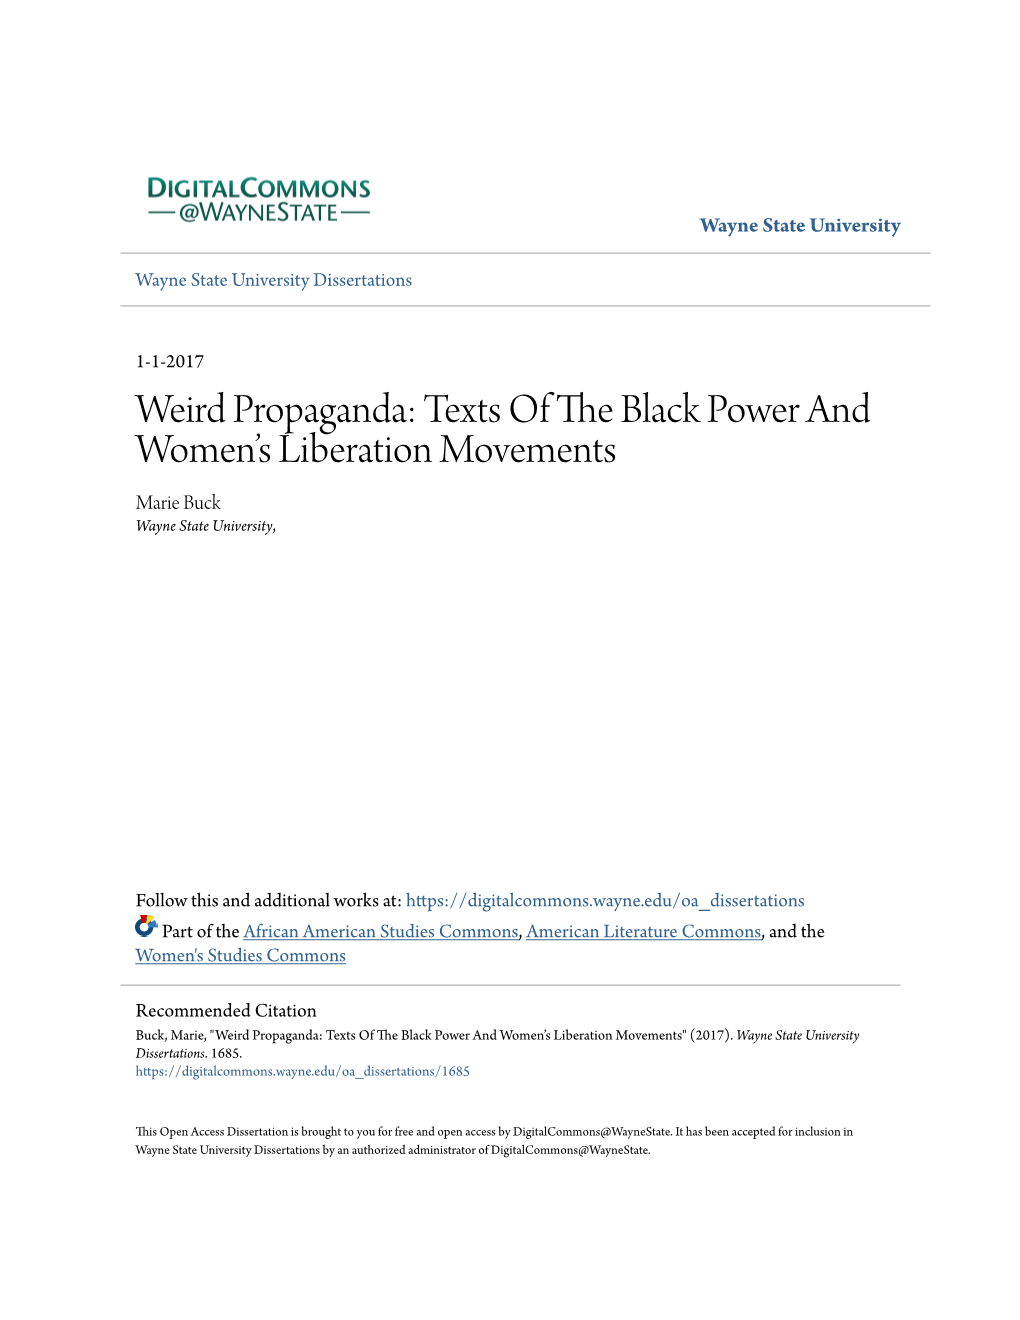 Weird Propaganda: Texts of the Black Power and Women's